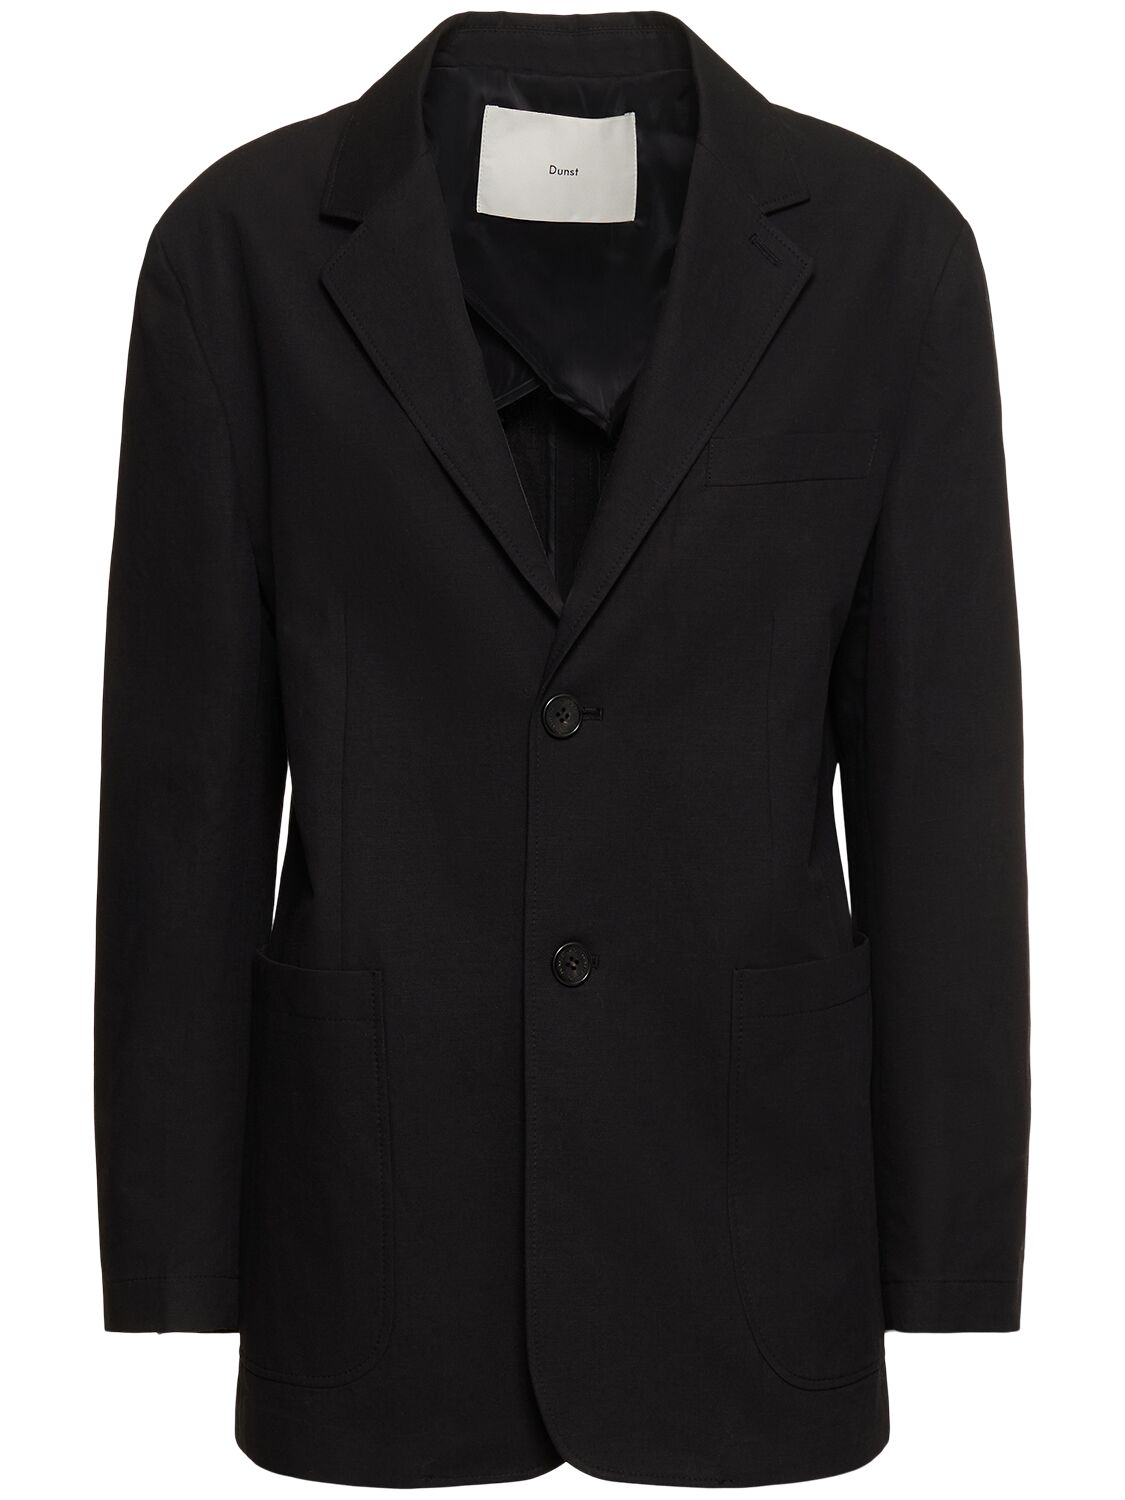 Dunst Cotton & Linen Boyfriend Jacket In Black